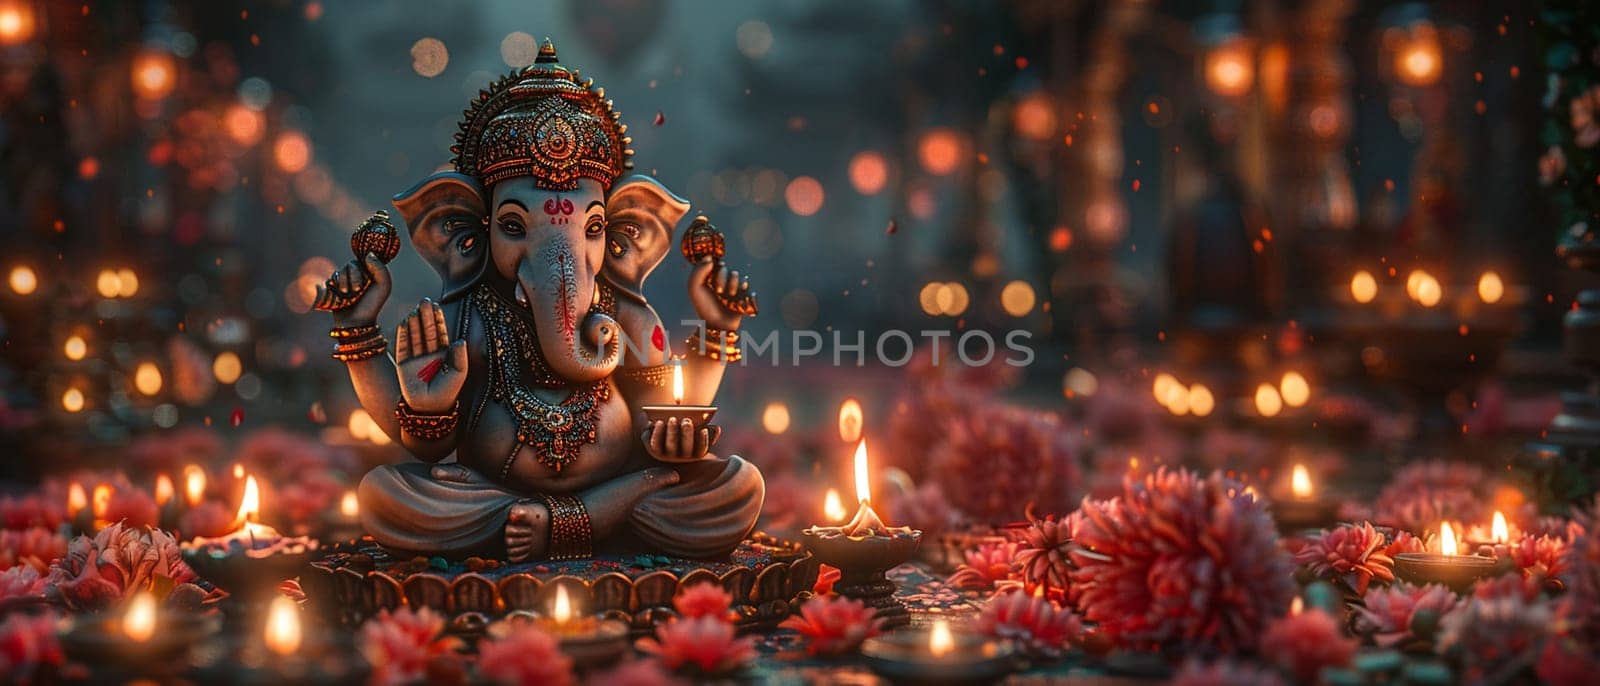 Ganesha Idol Serenely Sitting Among Diwali Lights by Benzoix